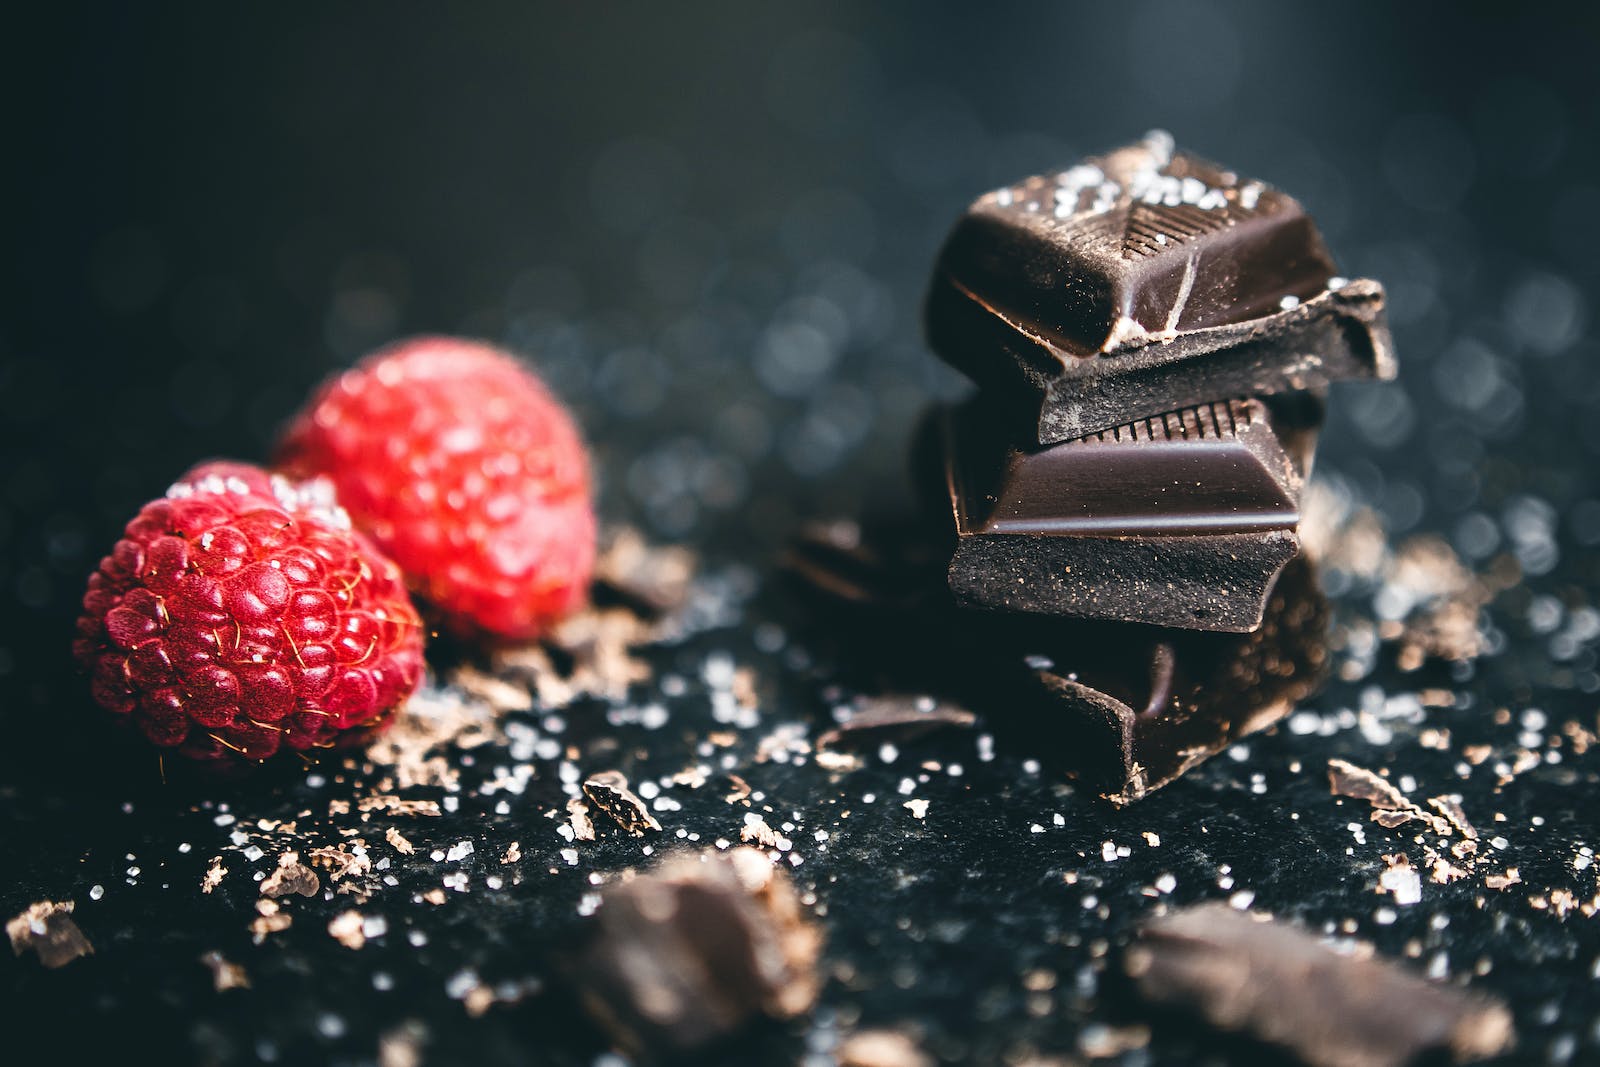 Le chocolat est-il vraiment aphrodisiaque? - Magazine LUV